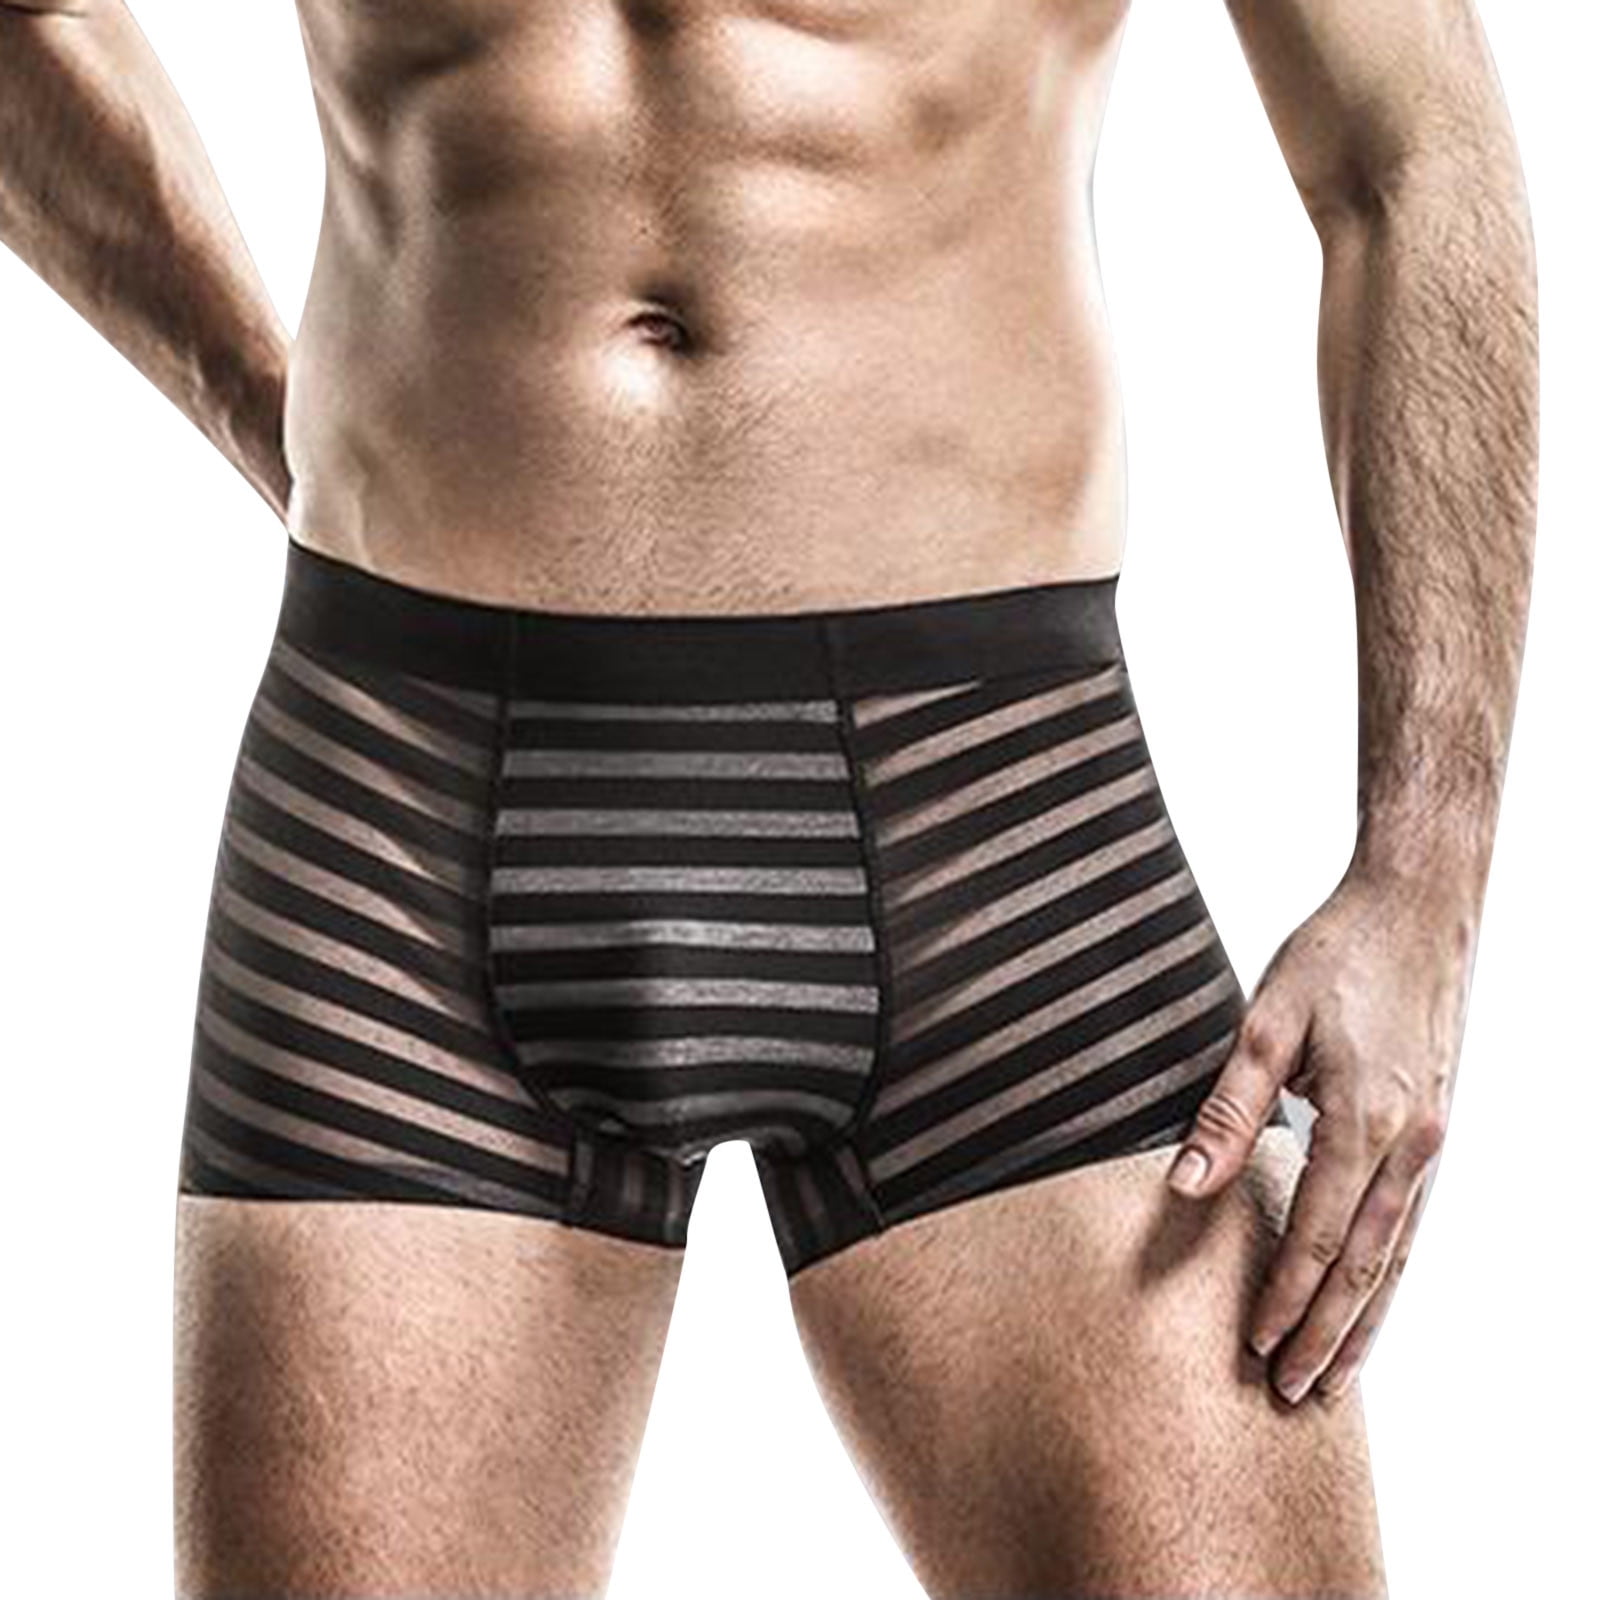 Chantilly Lounge Pants | Men's Erotic Sheer Trousers